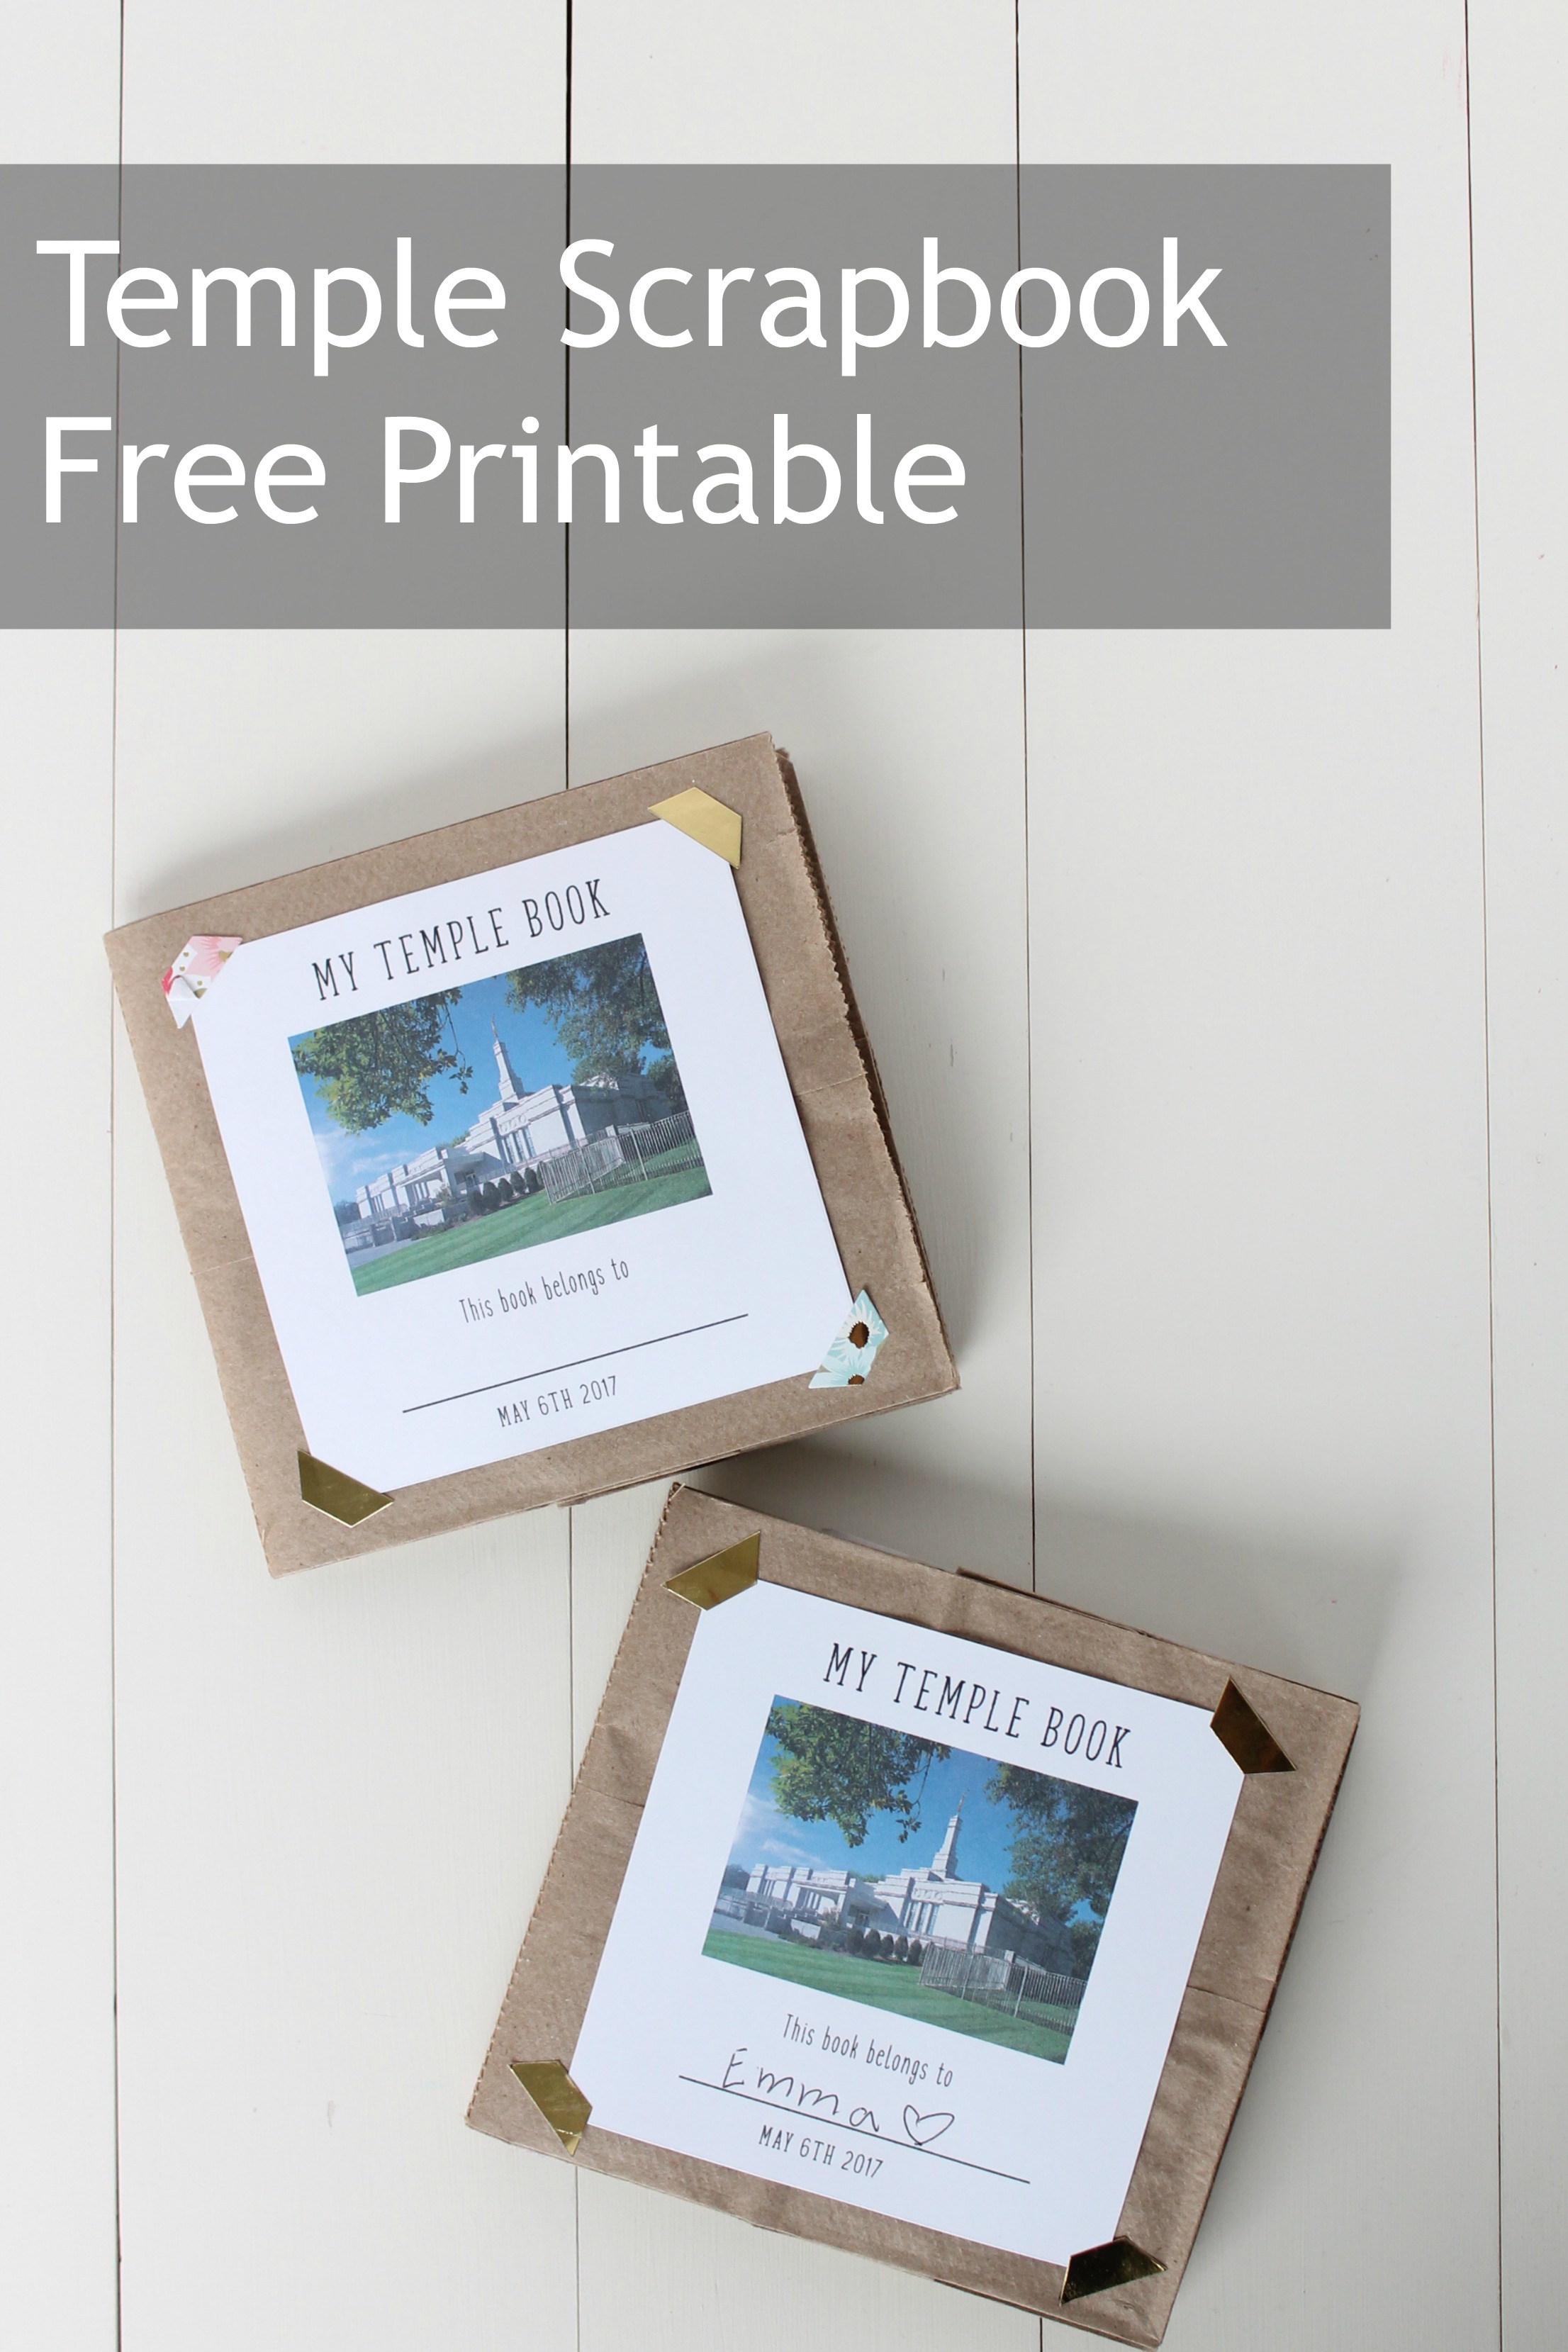 Primary Temple Activity Free Printable Scrapbook